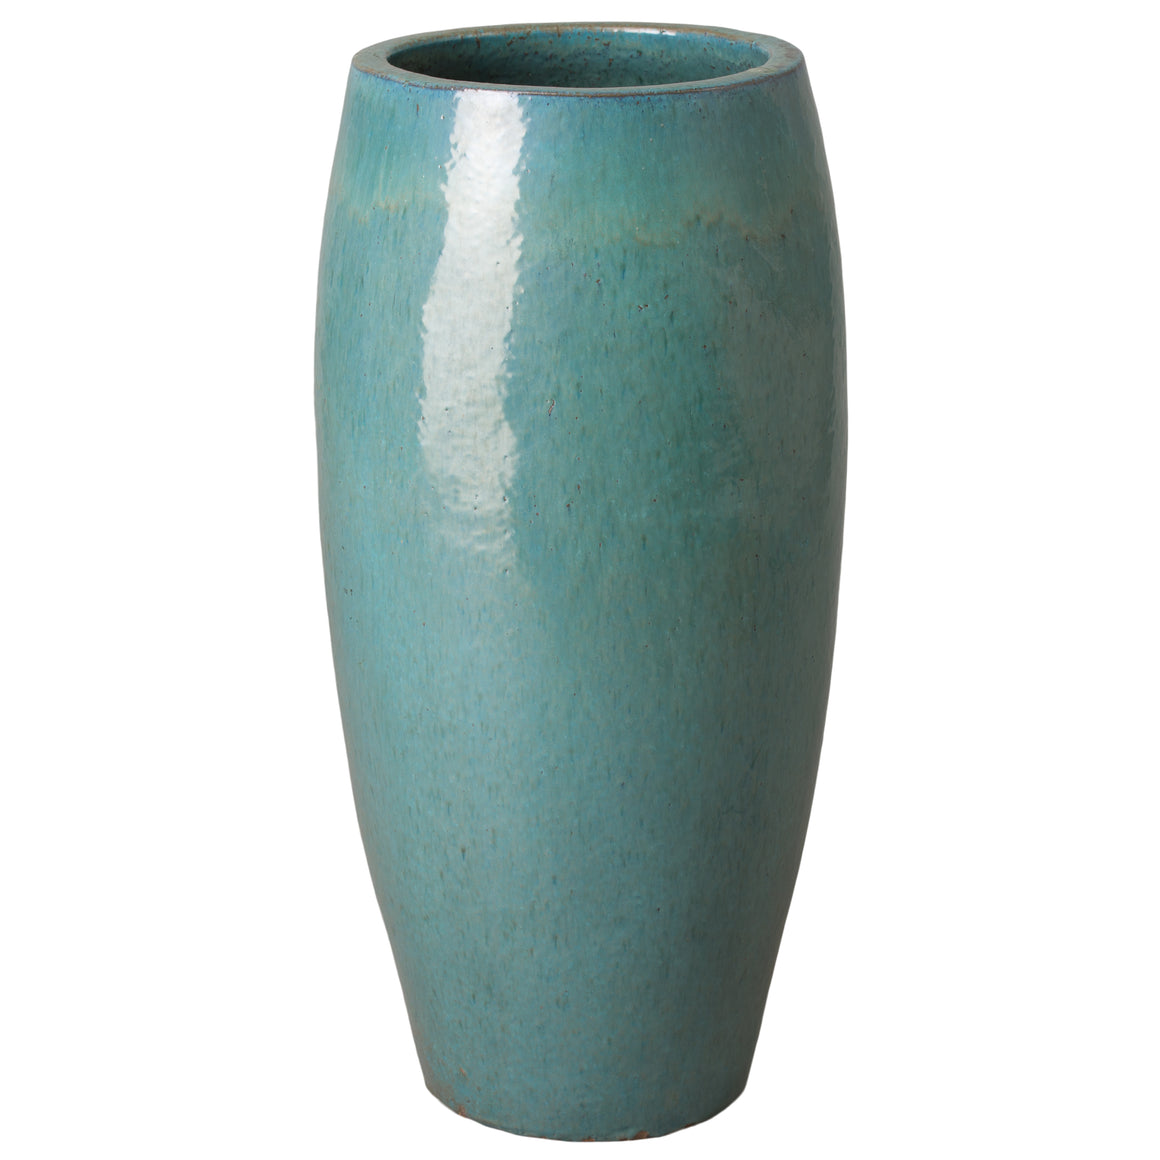 Large Ceramic Jar with a Teal Glaze